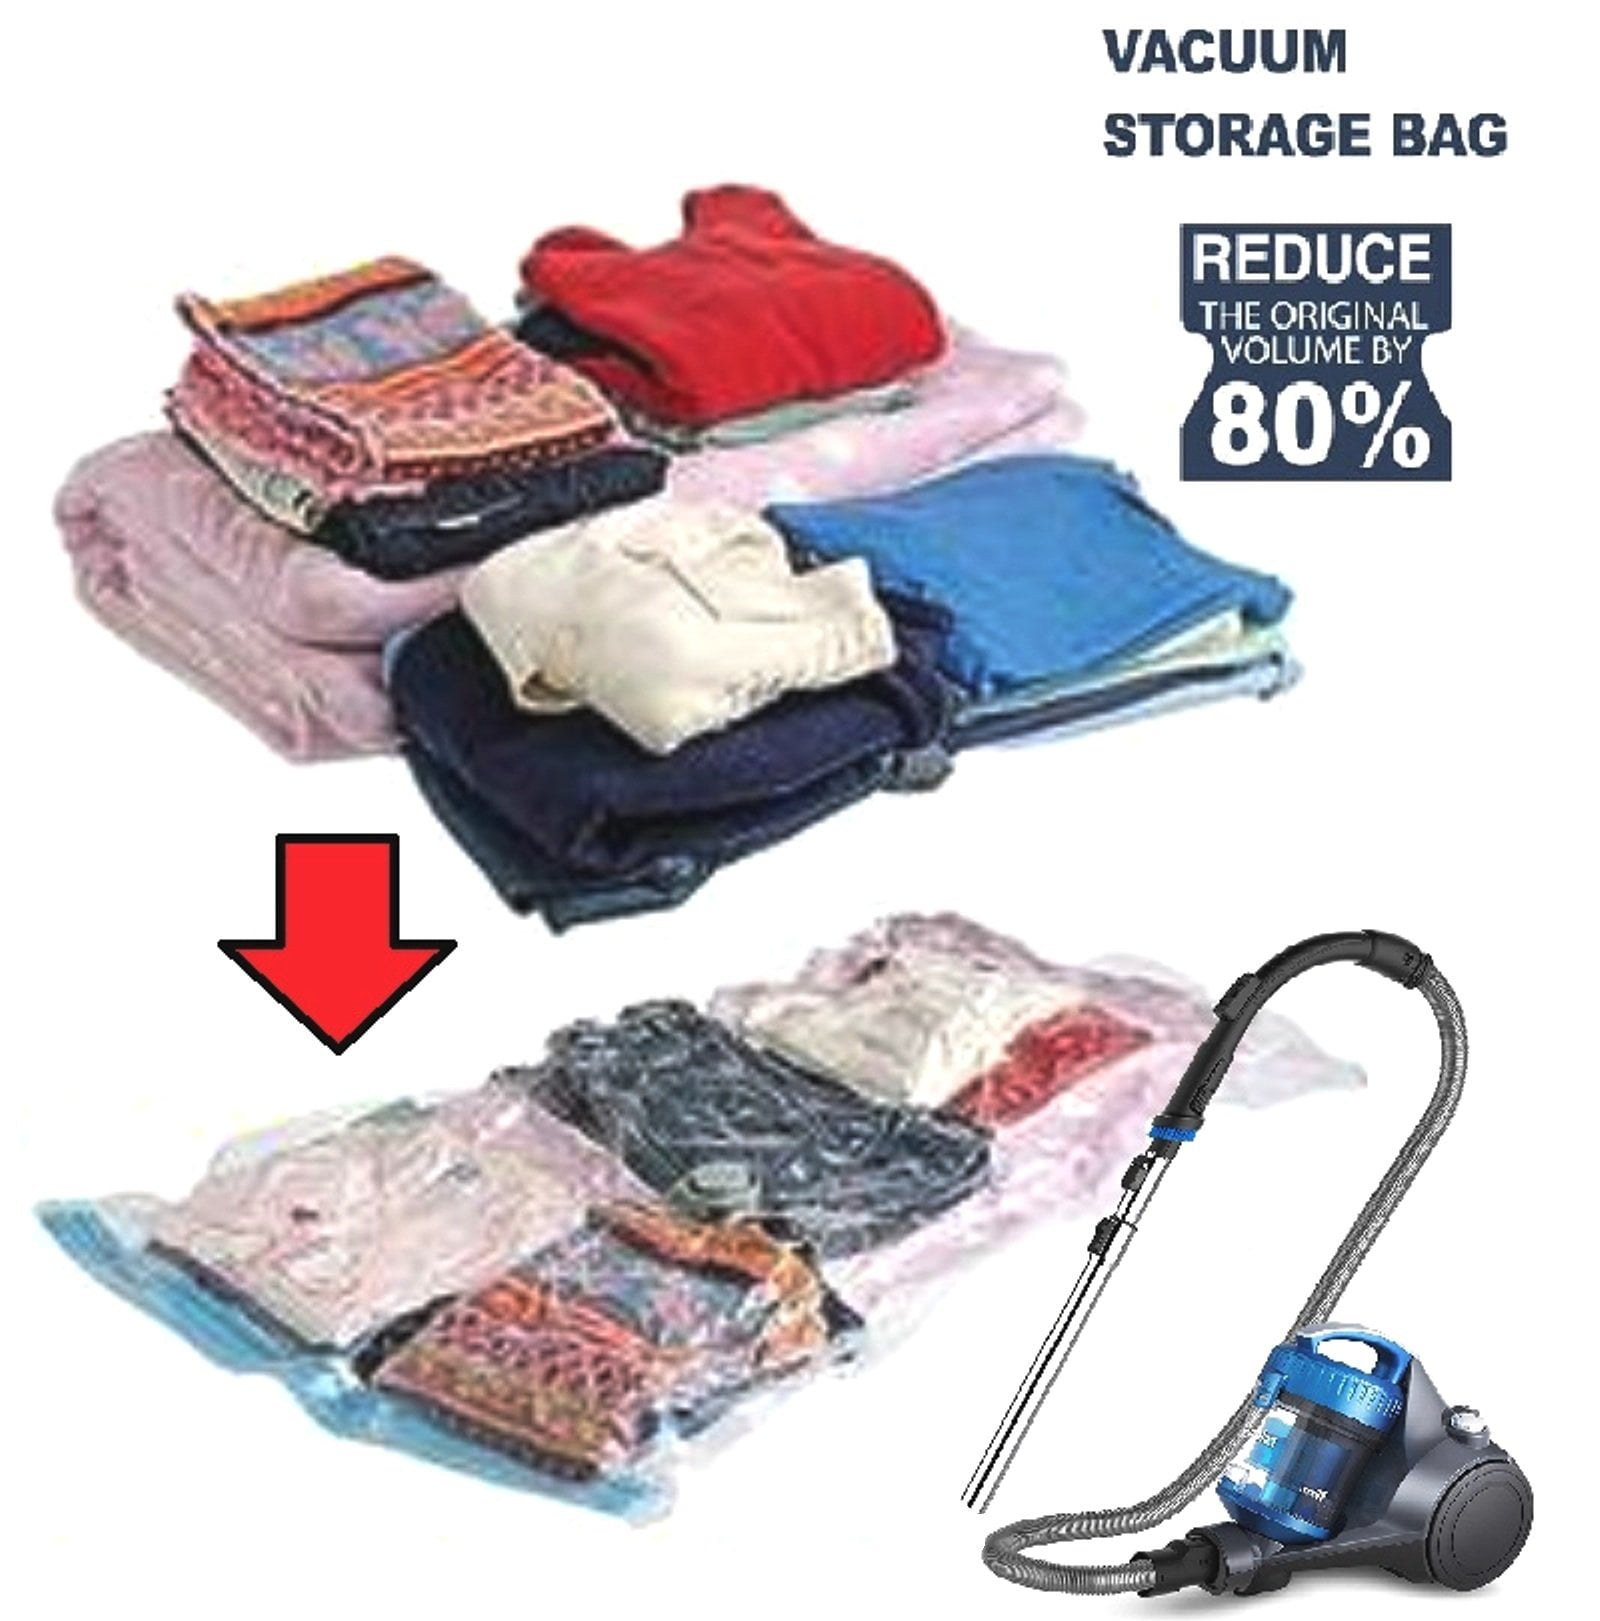 S C JOHNSON WAX Space Bag Storage Bag, Vacuum Seal, Jumbo, 1 bag - Space Bag